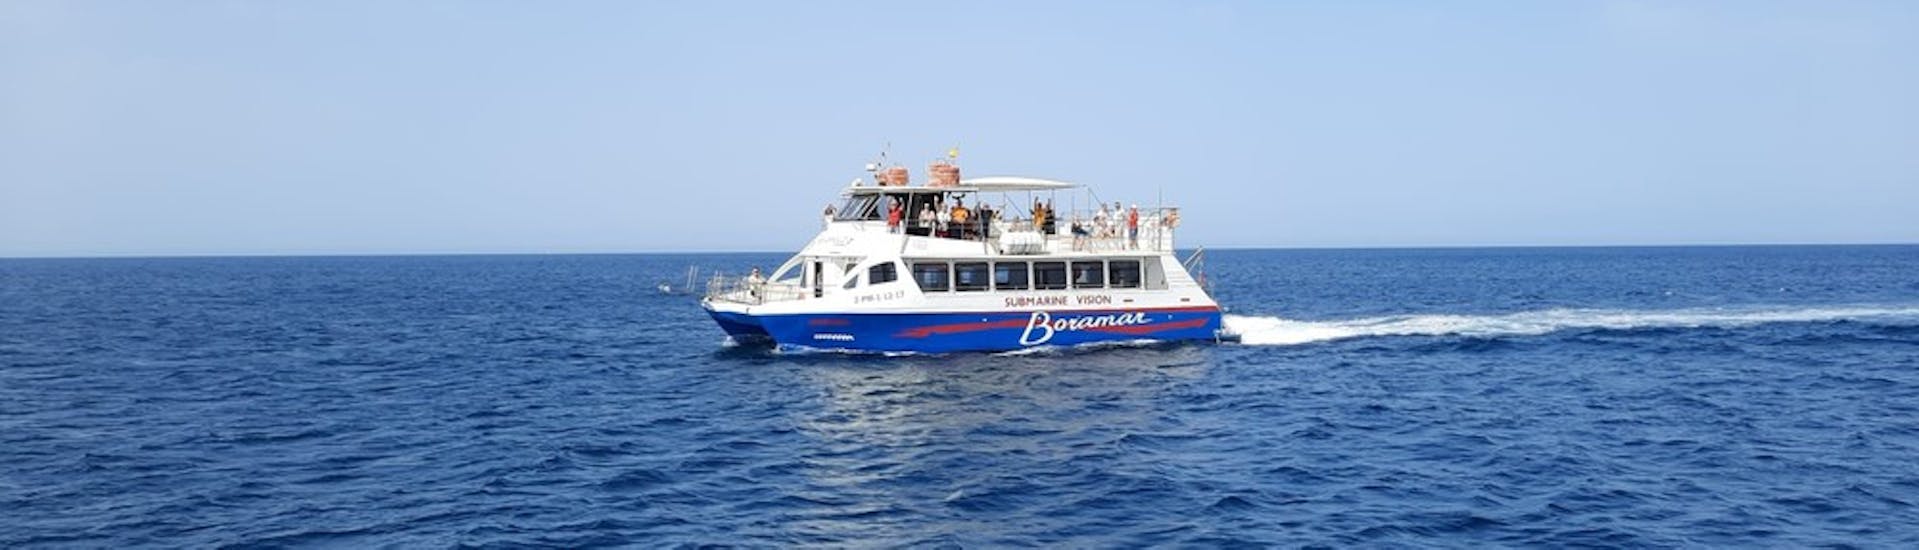 Transfert en bateau entre Denia et Jávea avec Boramar Denia.